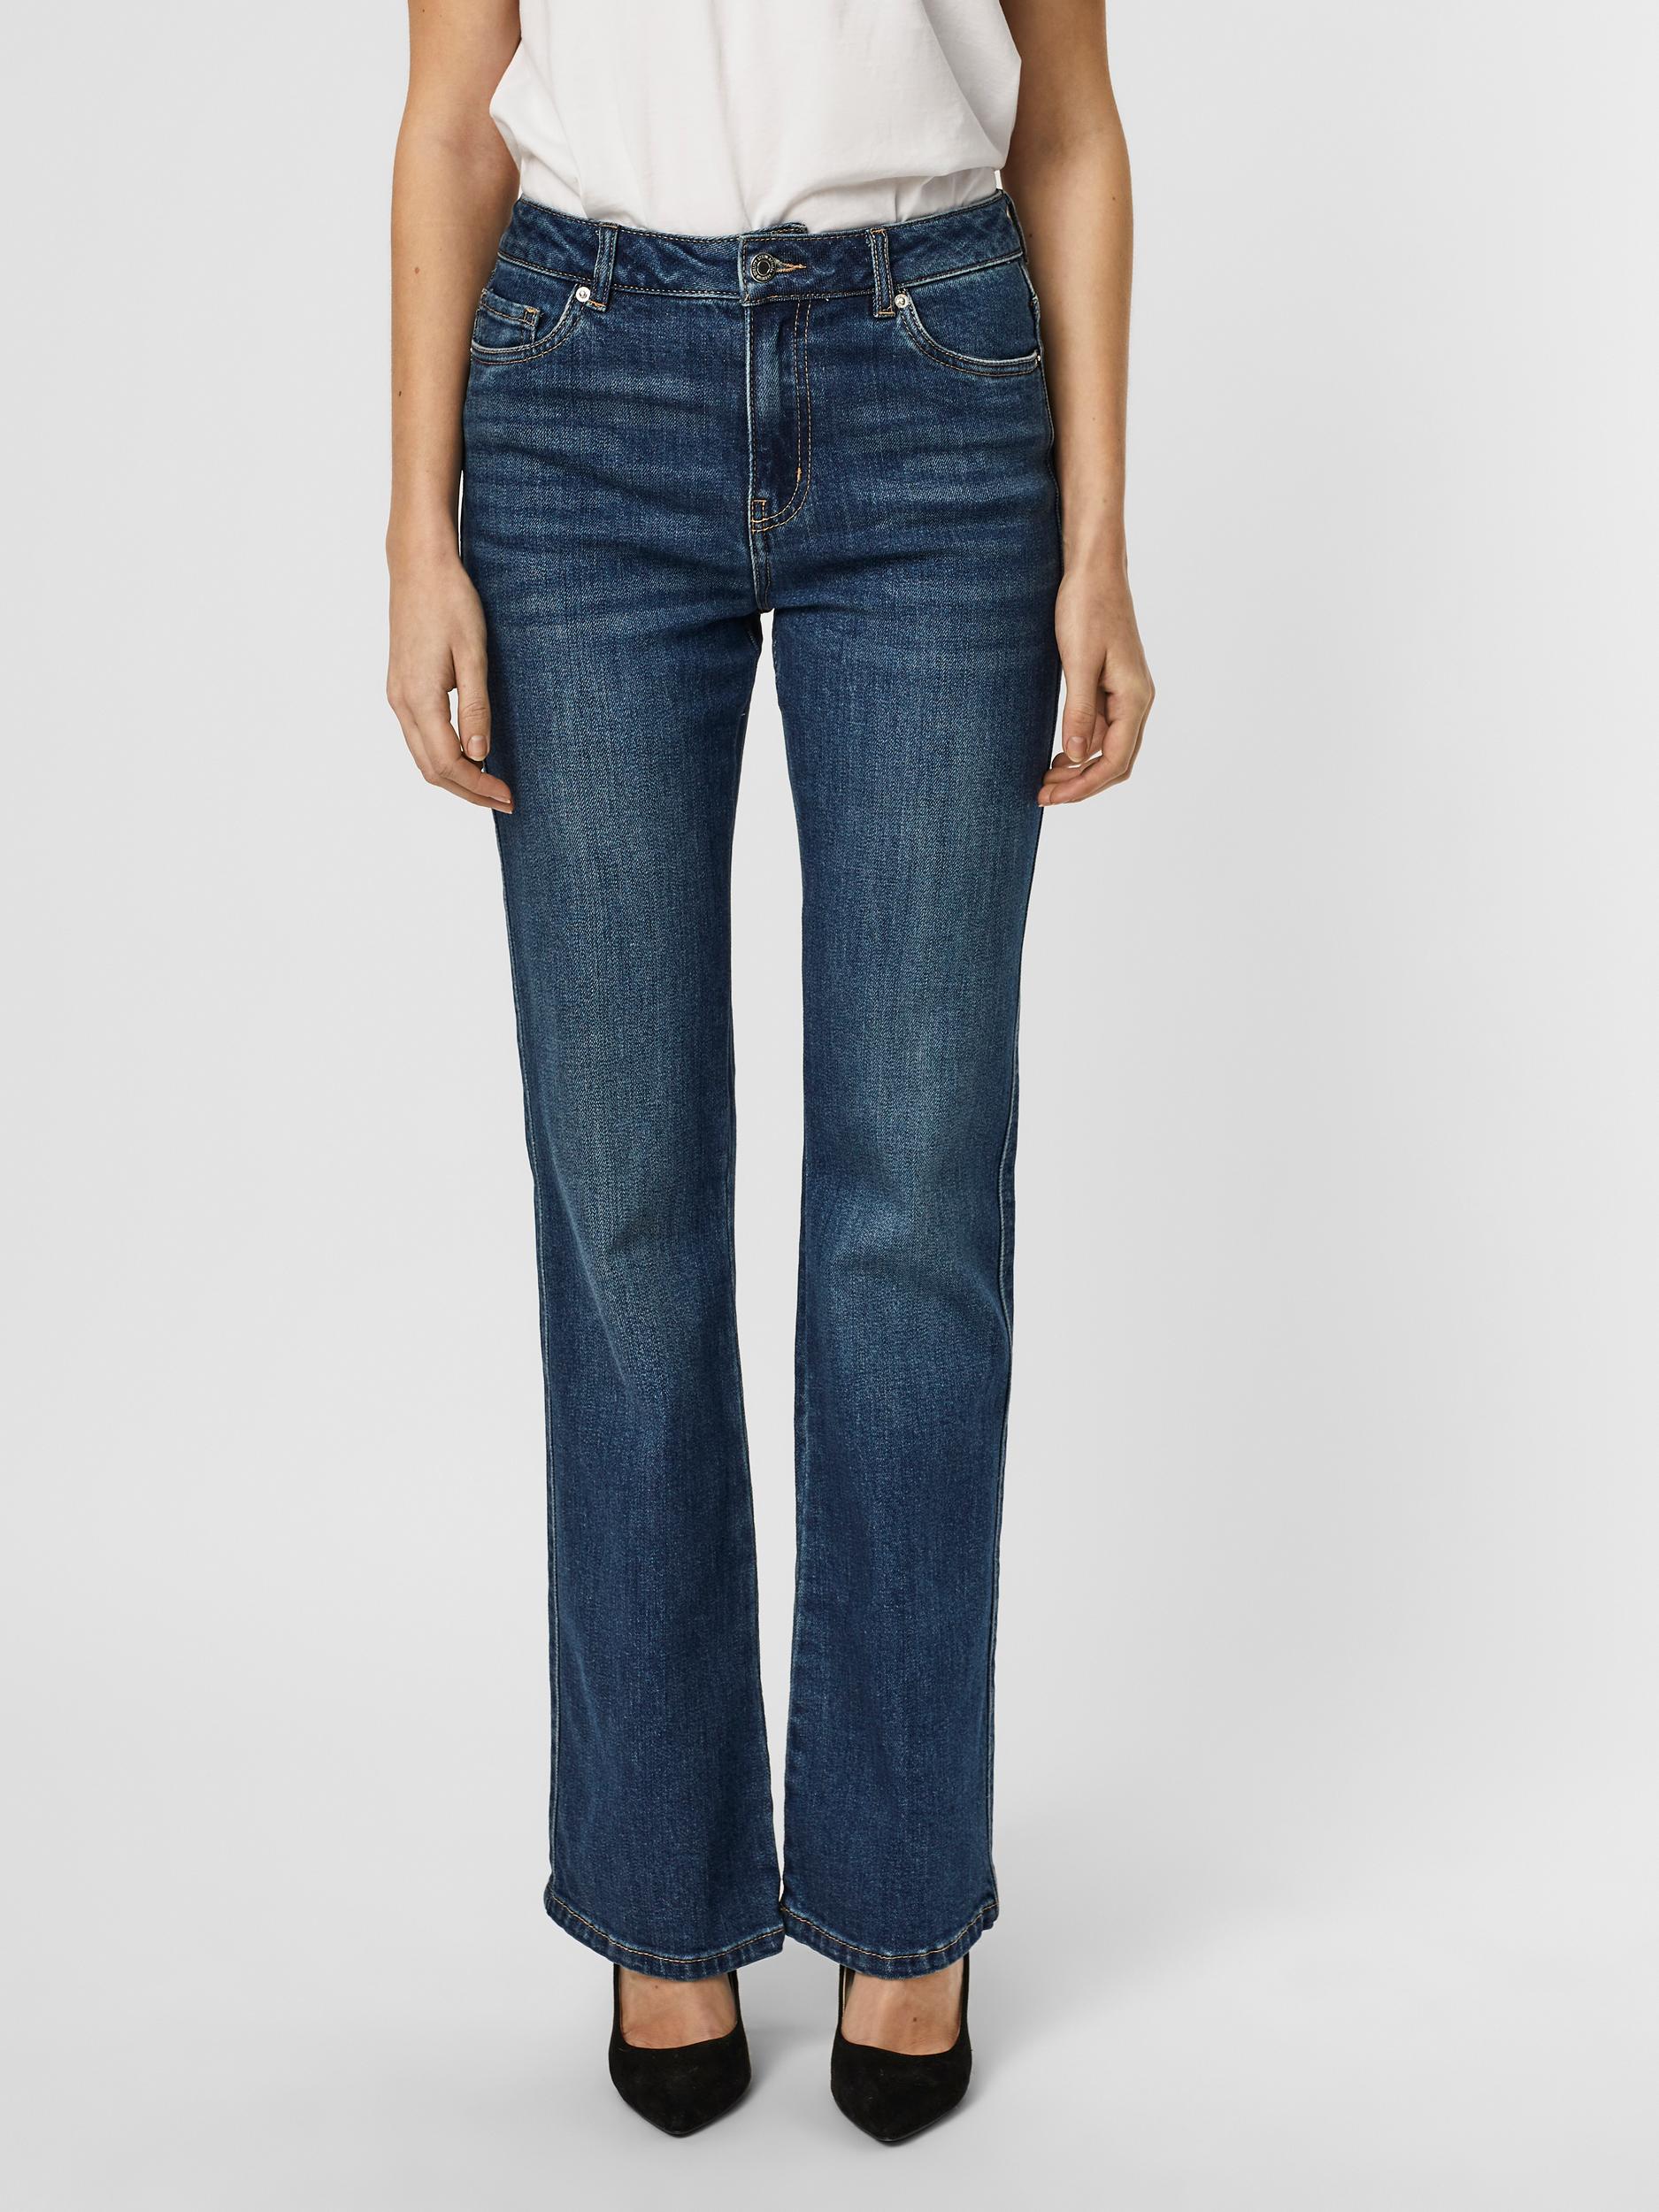 FINAL SALE - Saga high waist flare fit jeans